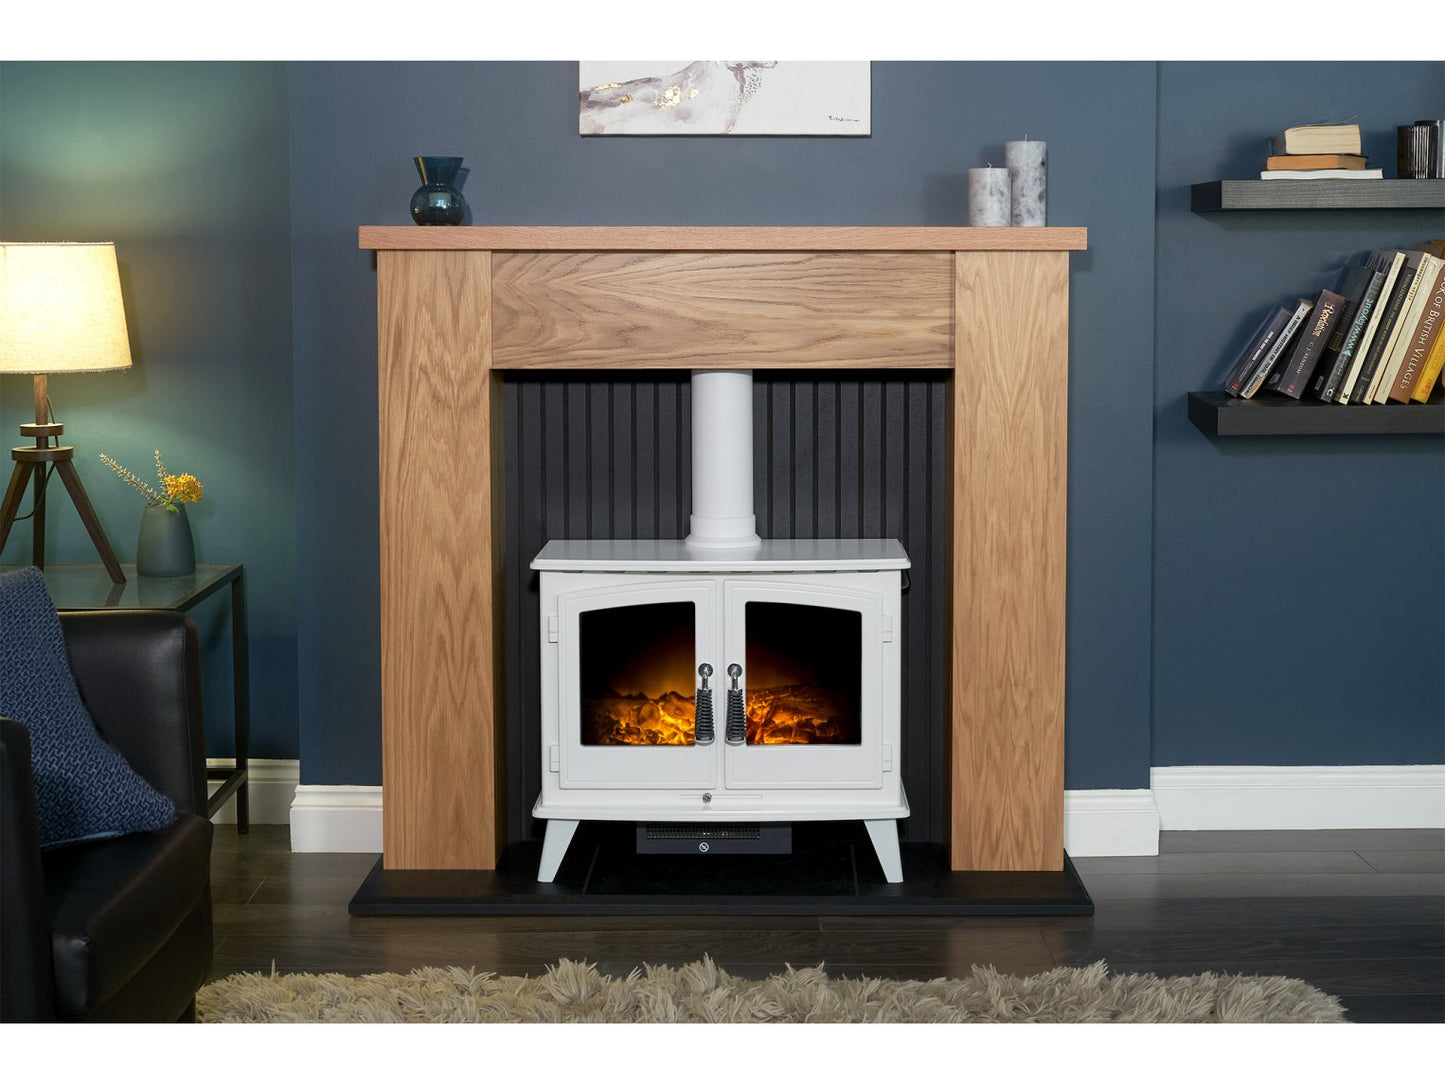 Adam New England Stove Fireplace Oak & Black + Woodhouse Electric Stove Pure White, 48"